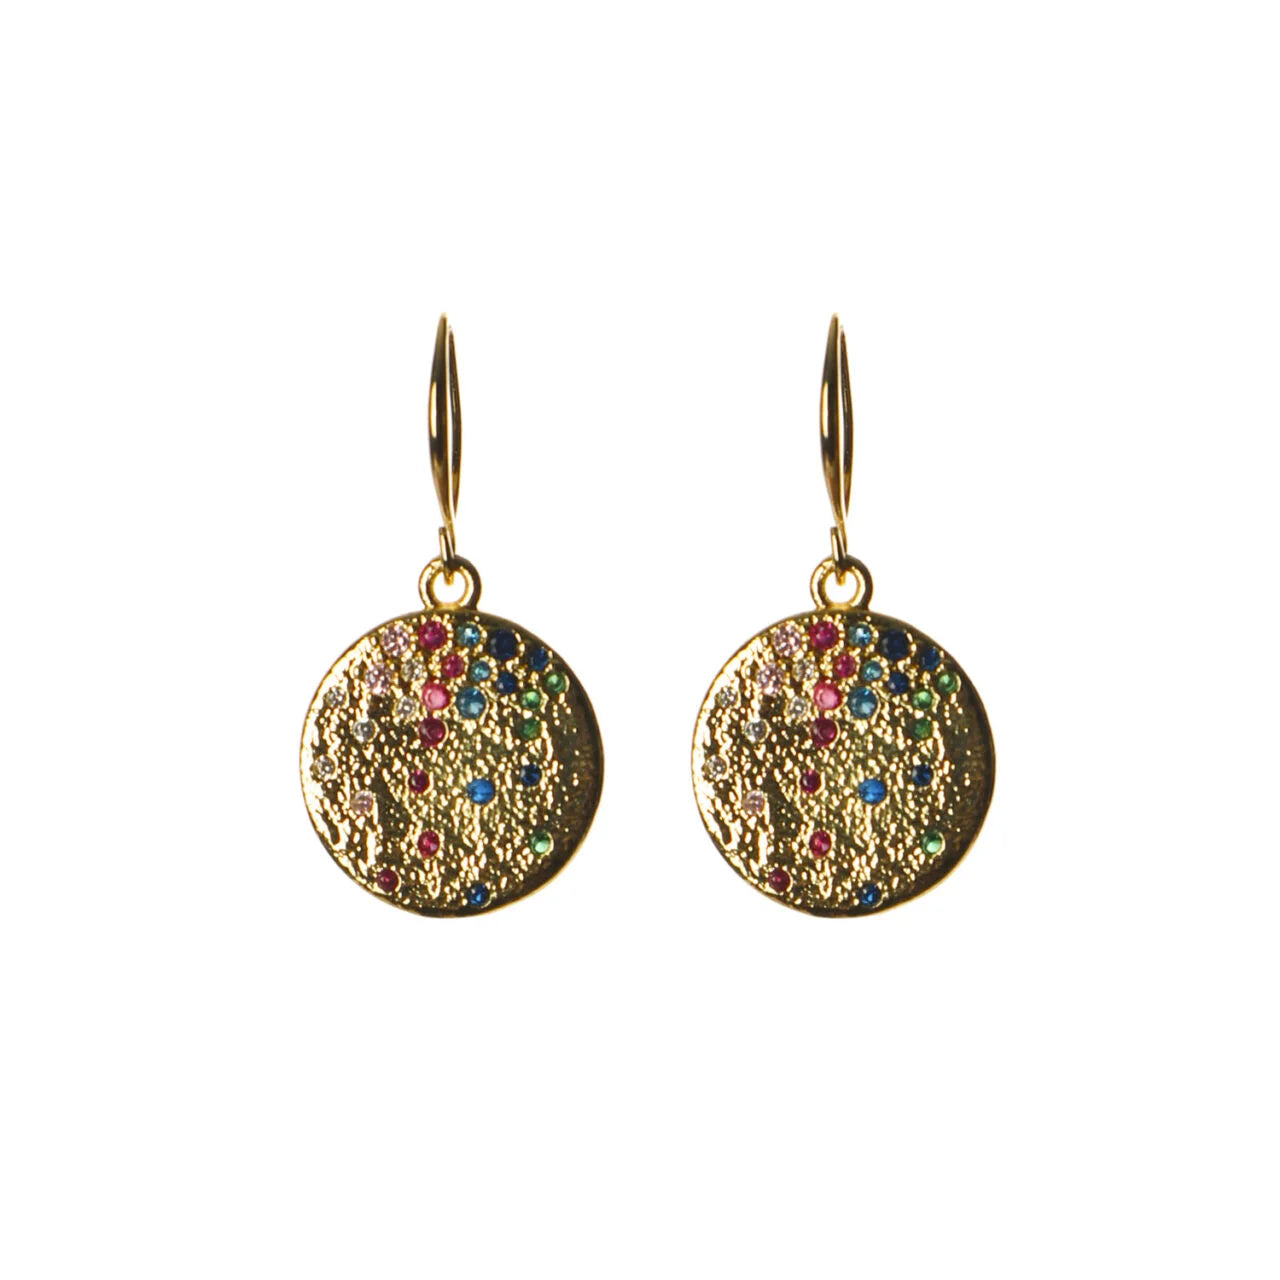 Fabulous Gifts Jewellery Earrings Multi Stone Gold by Weirs of Baggot Street